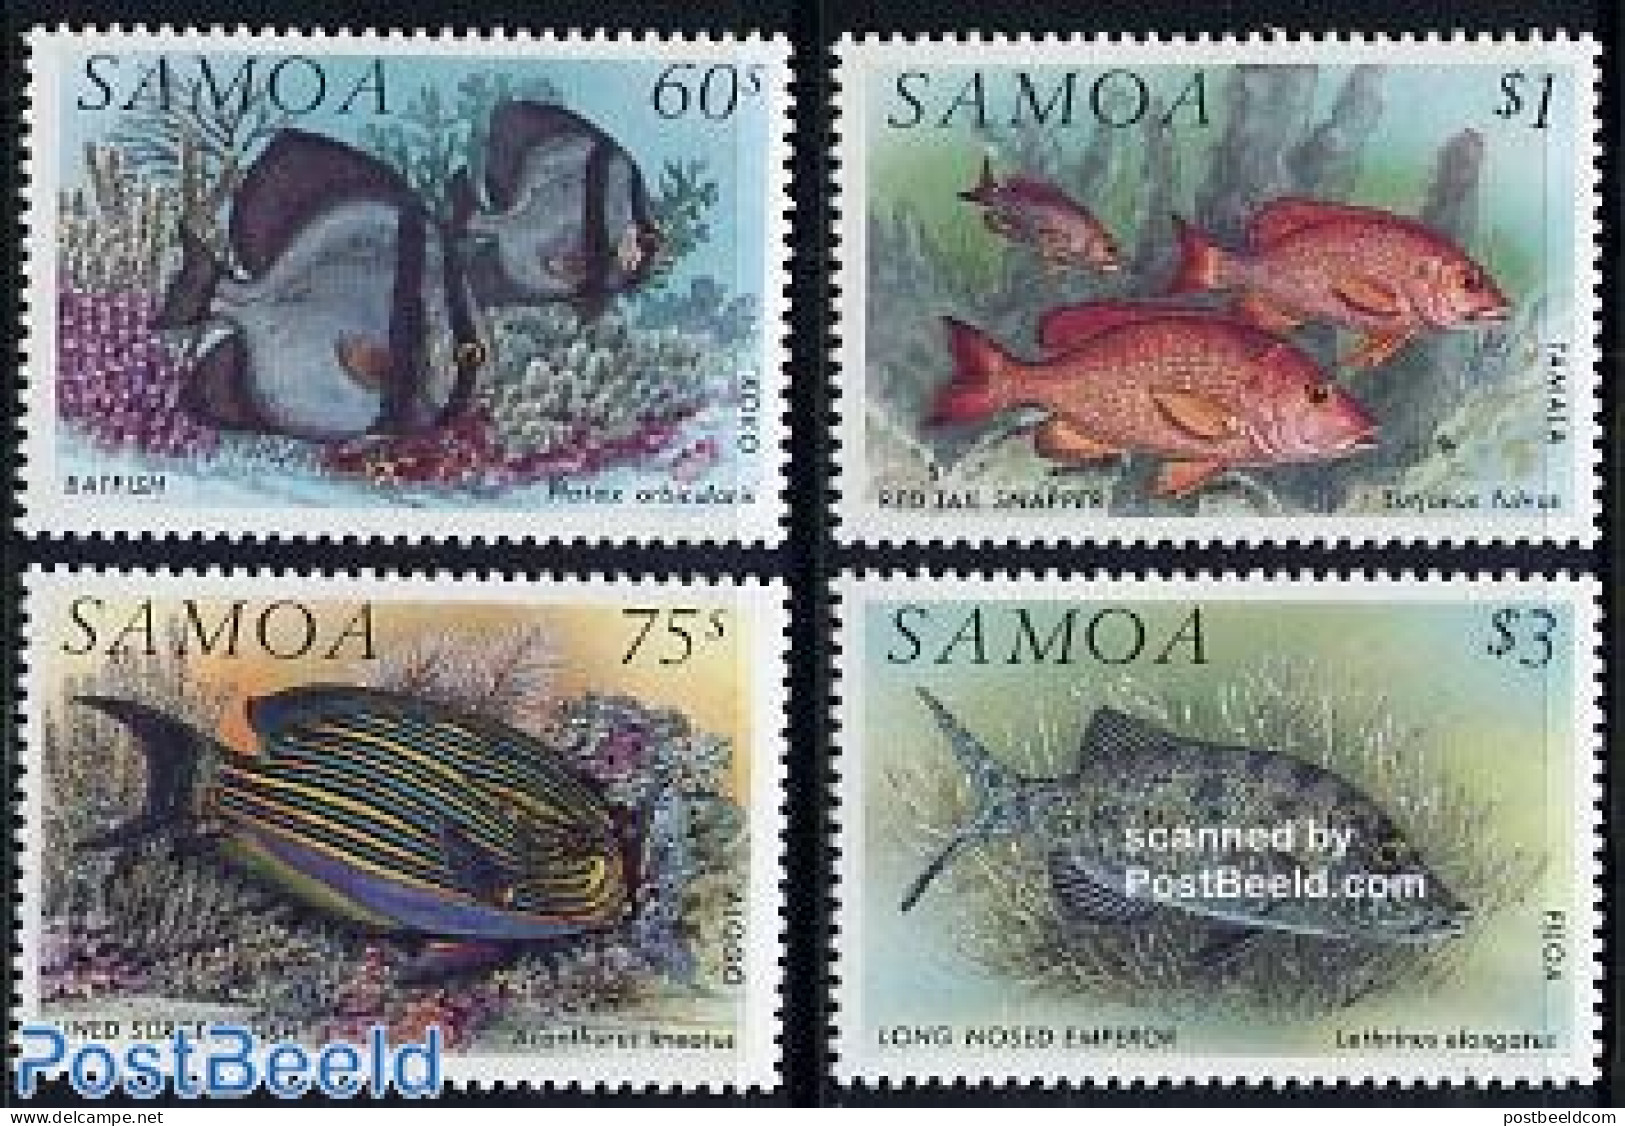 Samoa 1993 Fish 4v, Mint NH, Nature - Fish - Fishes